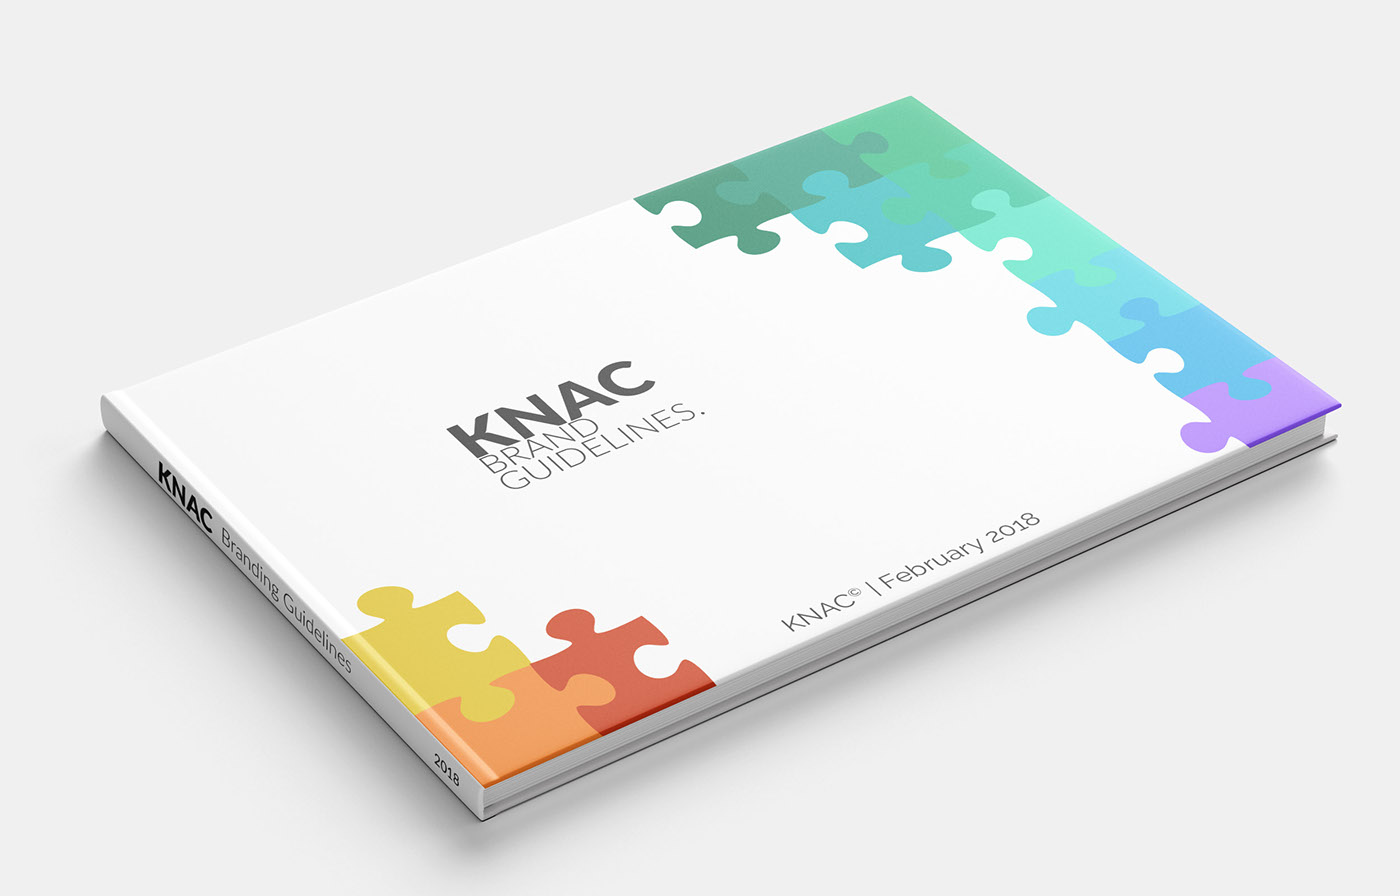 KNAC Project (USA)